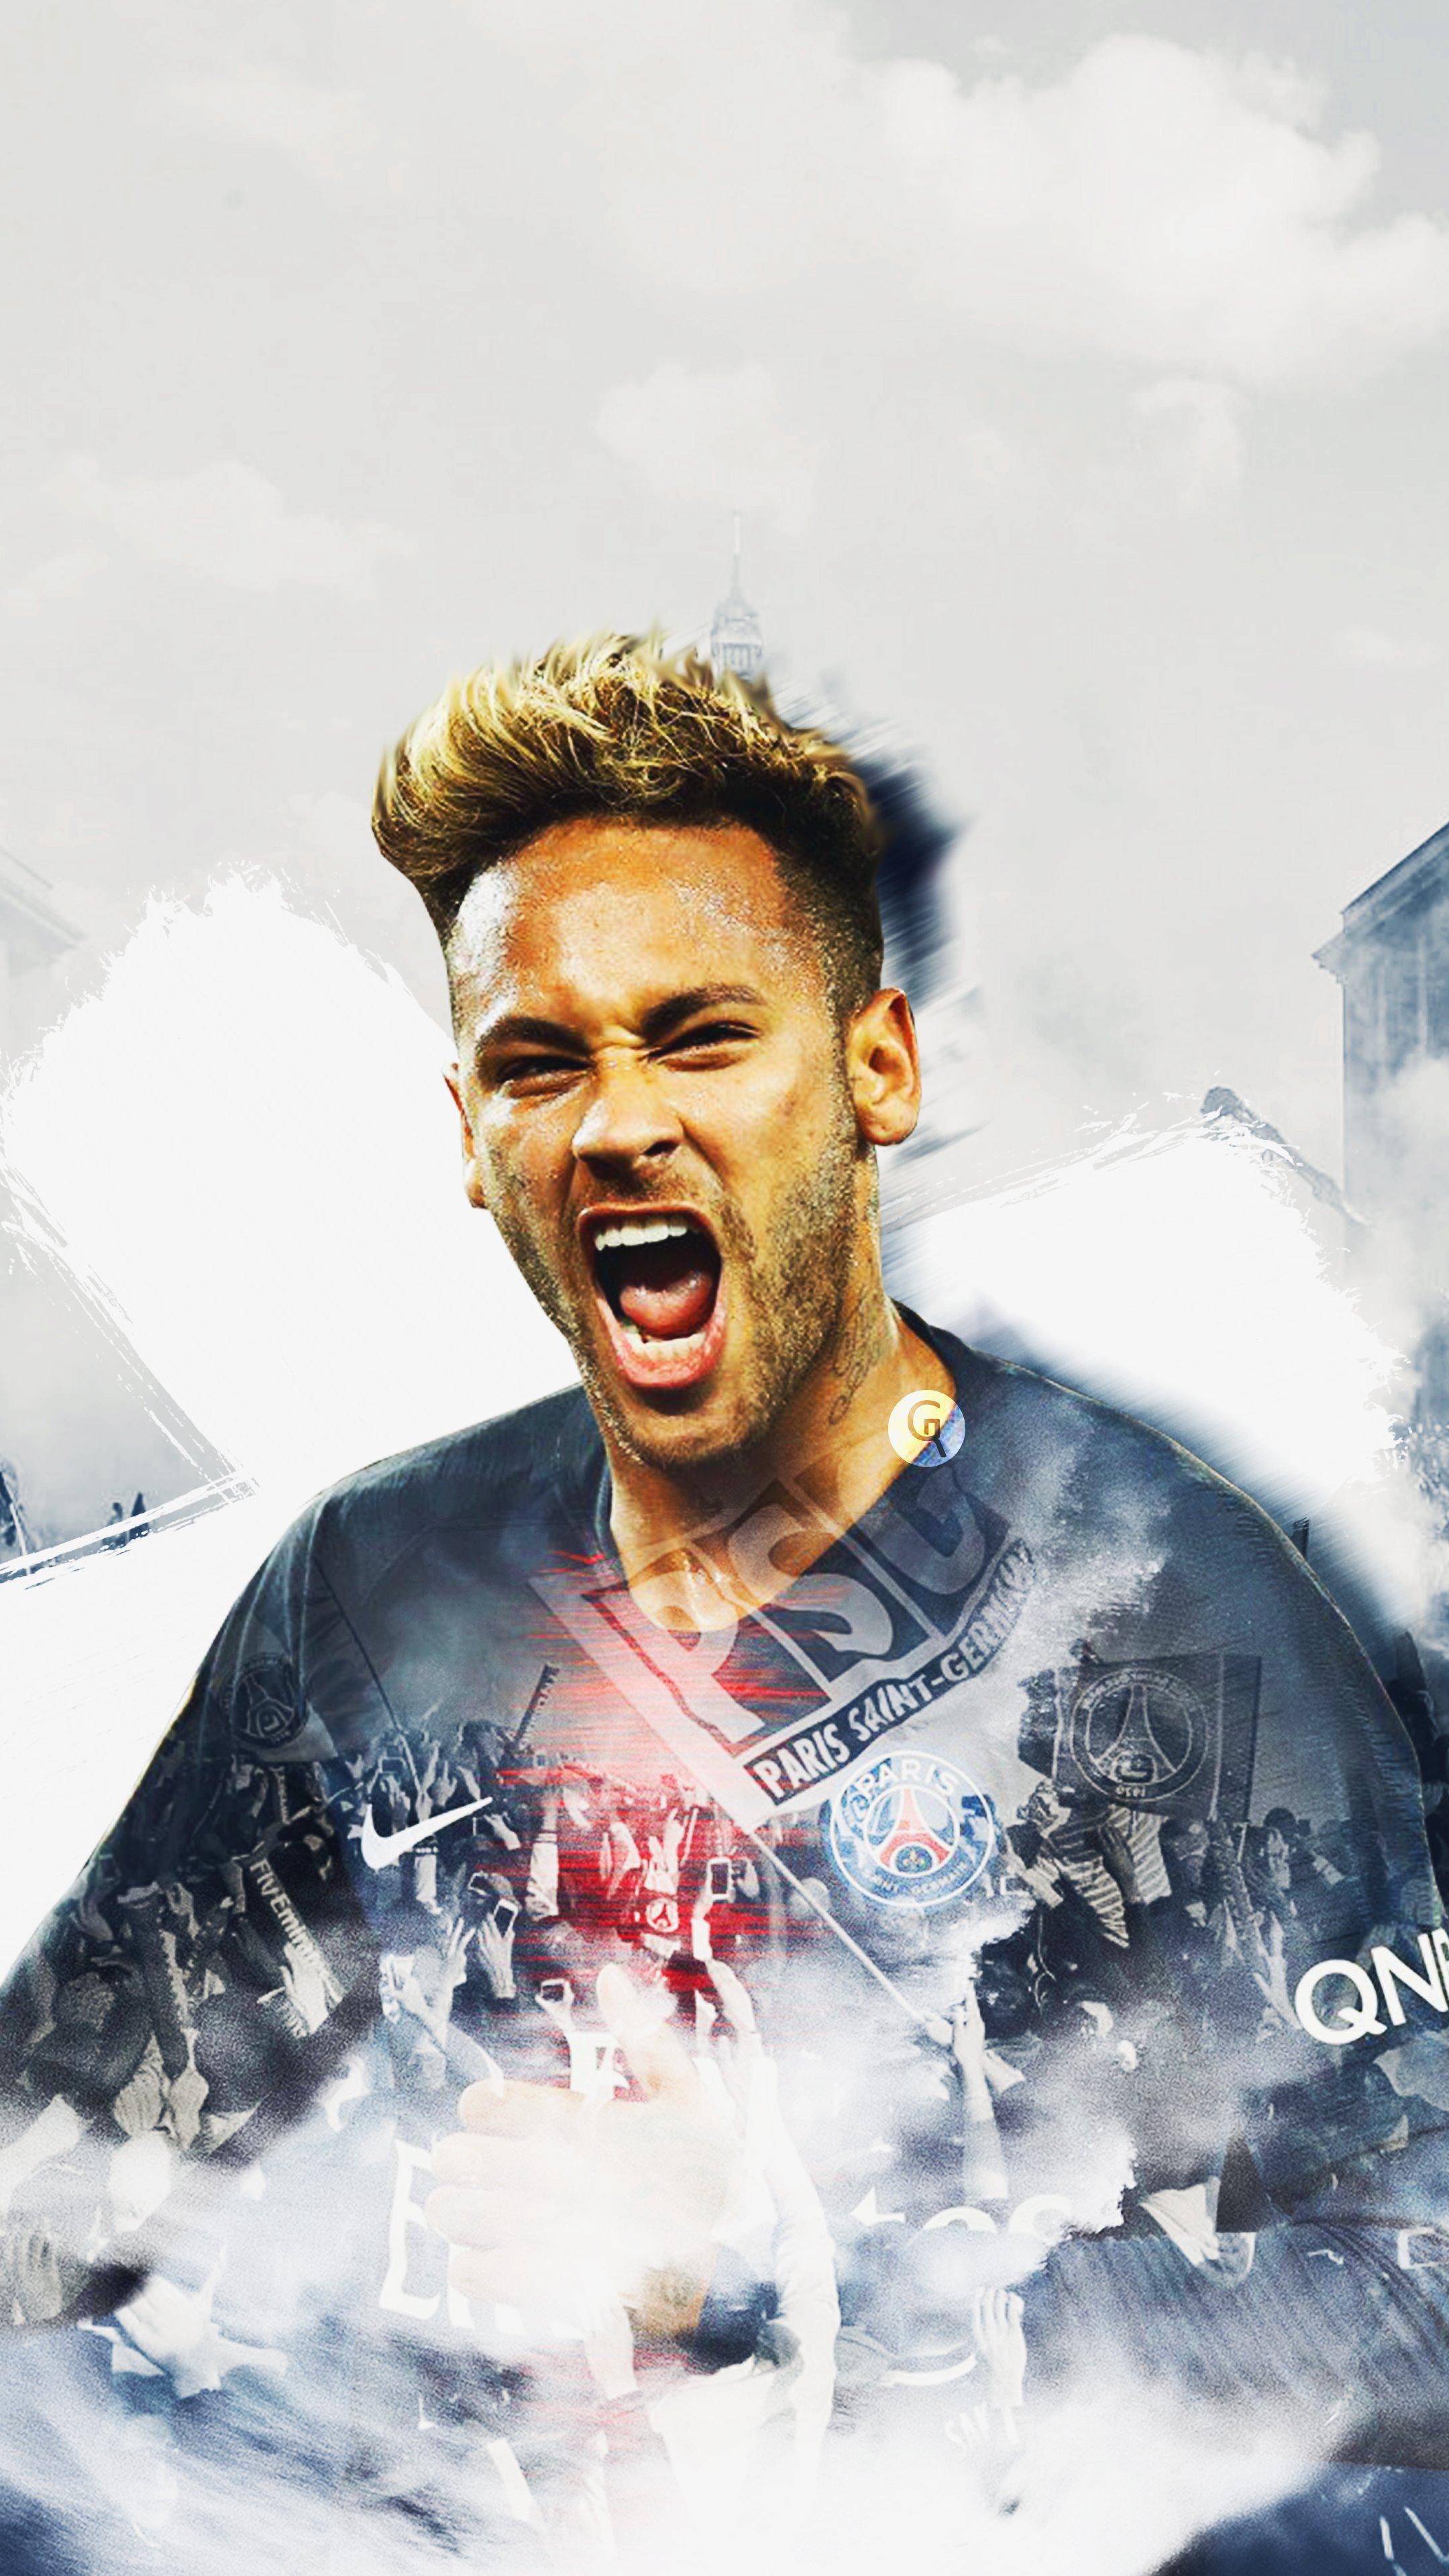 Neymar 2020 wallpaper